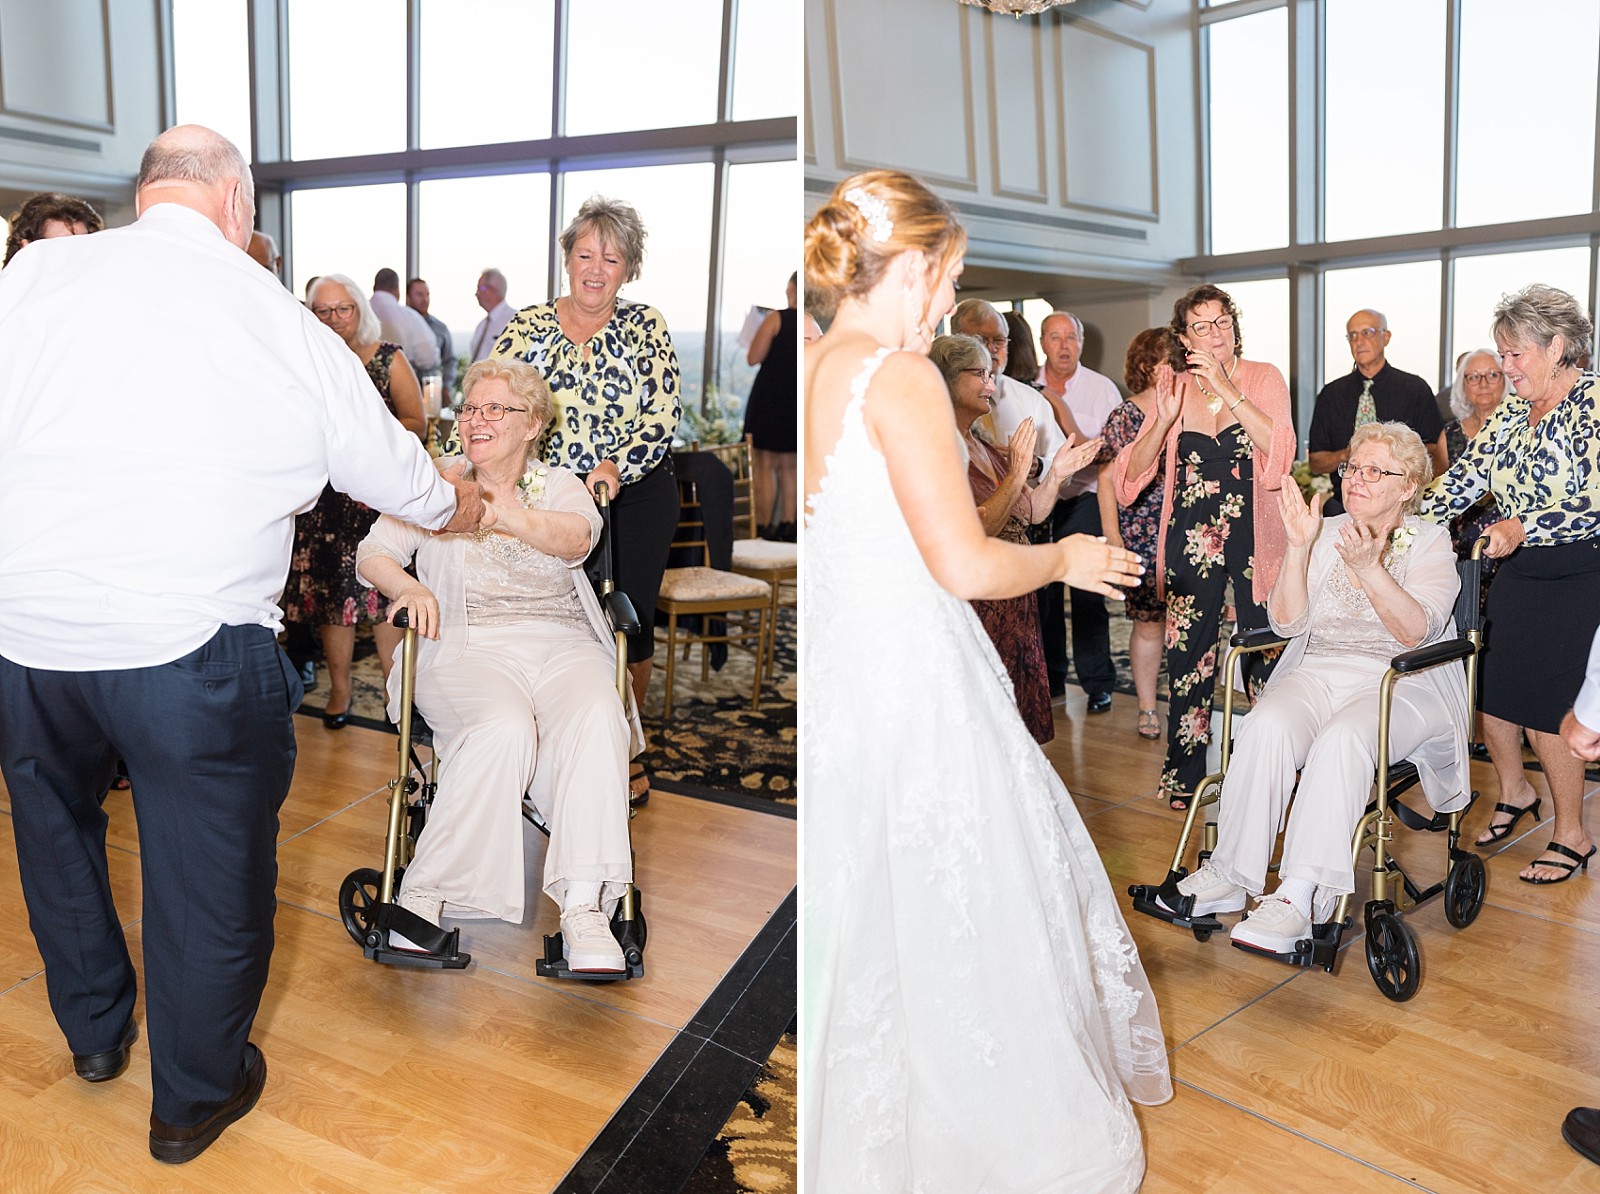 Bride dancing with wedding guests | Raleigh Wedding Photographer Sarah Hinckley